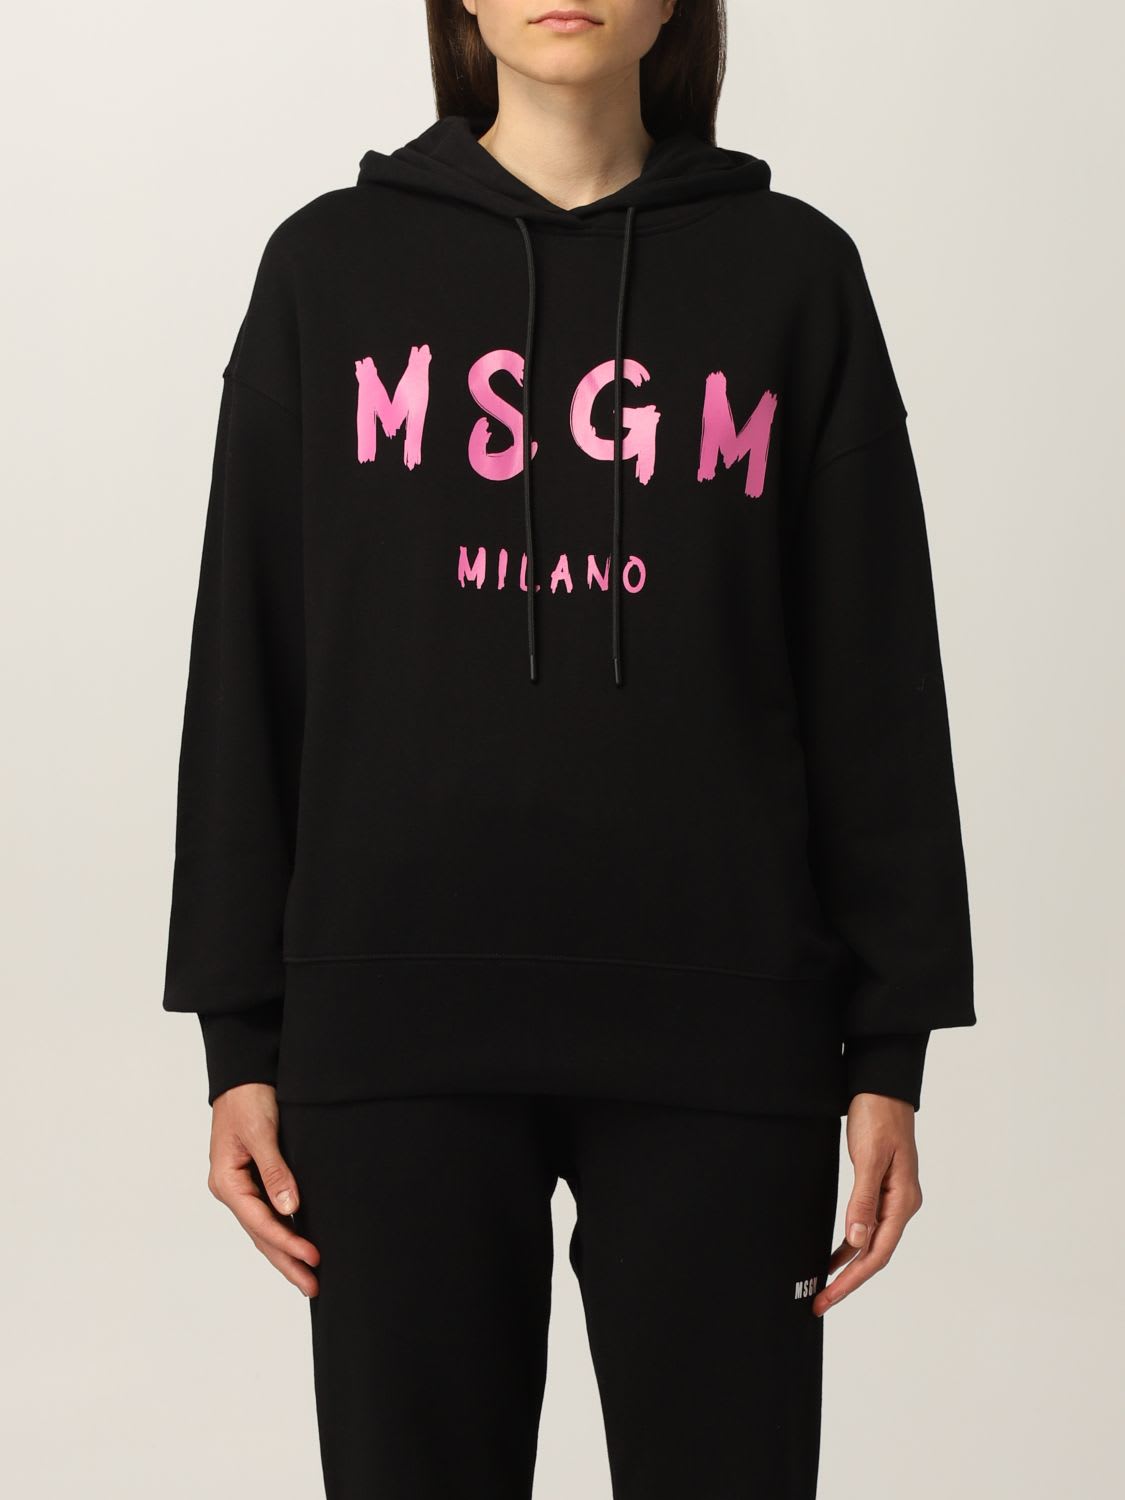 Msgm Sweatshirt Sweatshirt Women Msgm